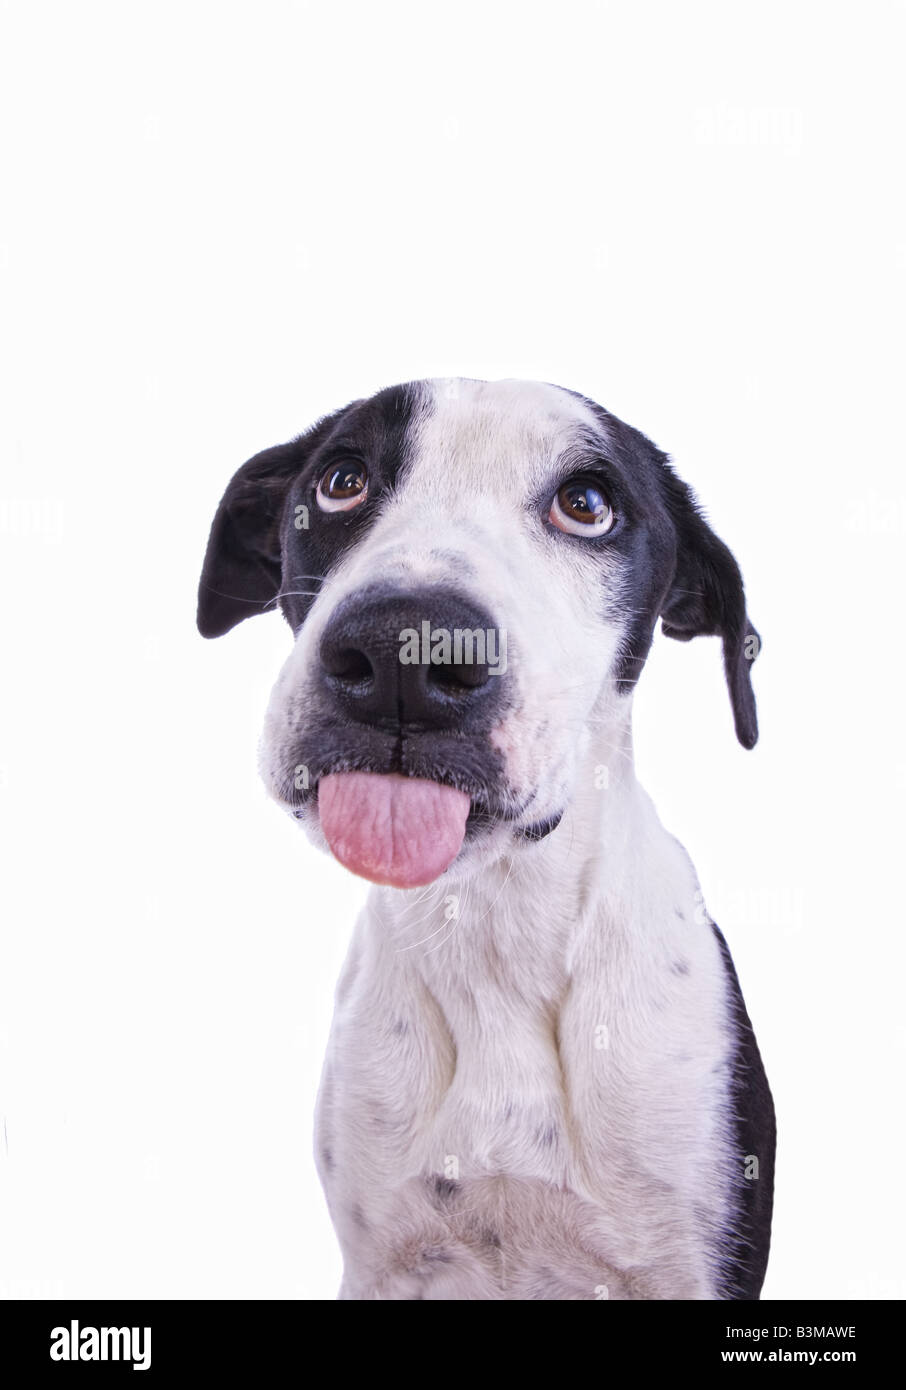 Bashful or sad Black and white Great Dane mix dog with tongue out isolated on white background Stock Photo